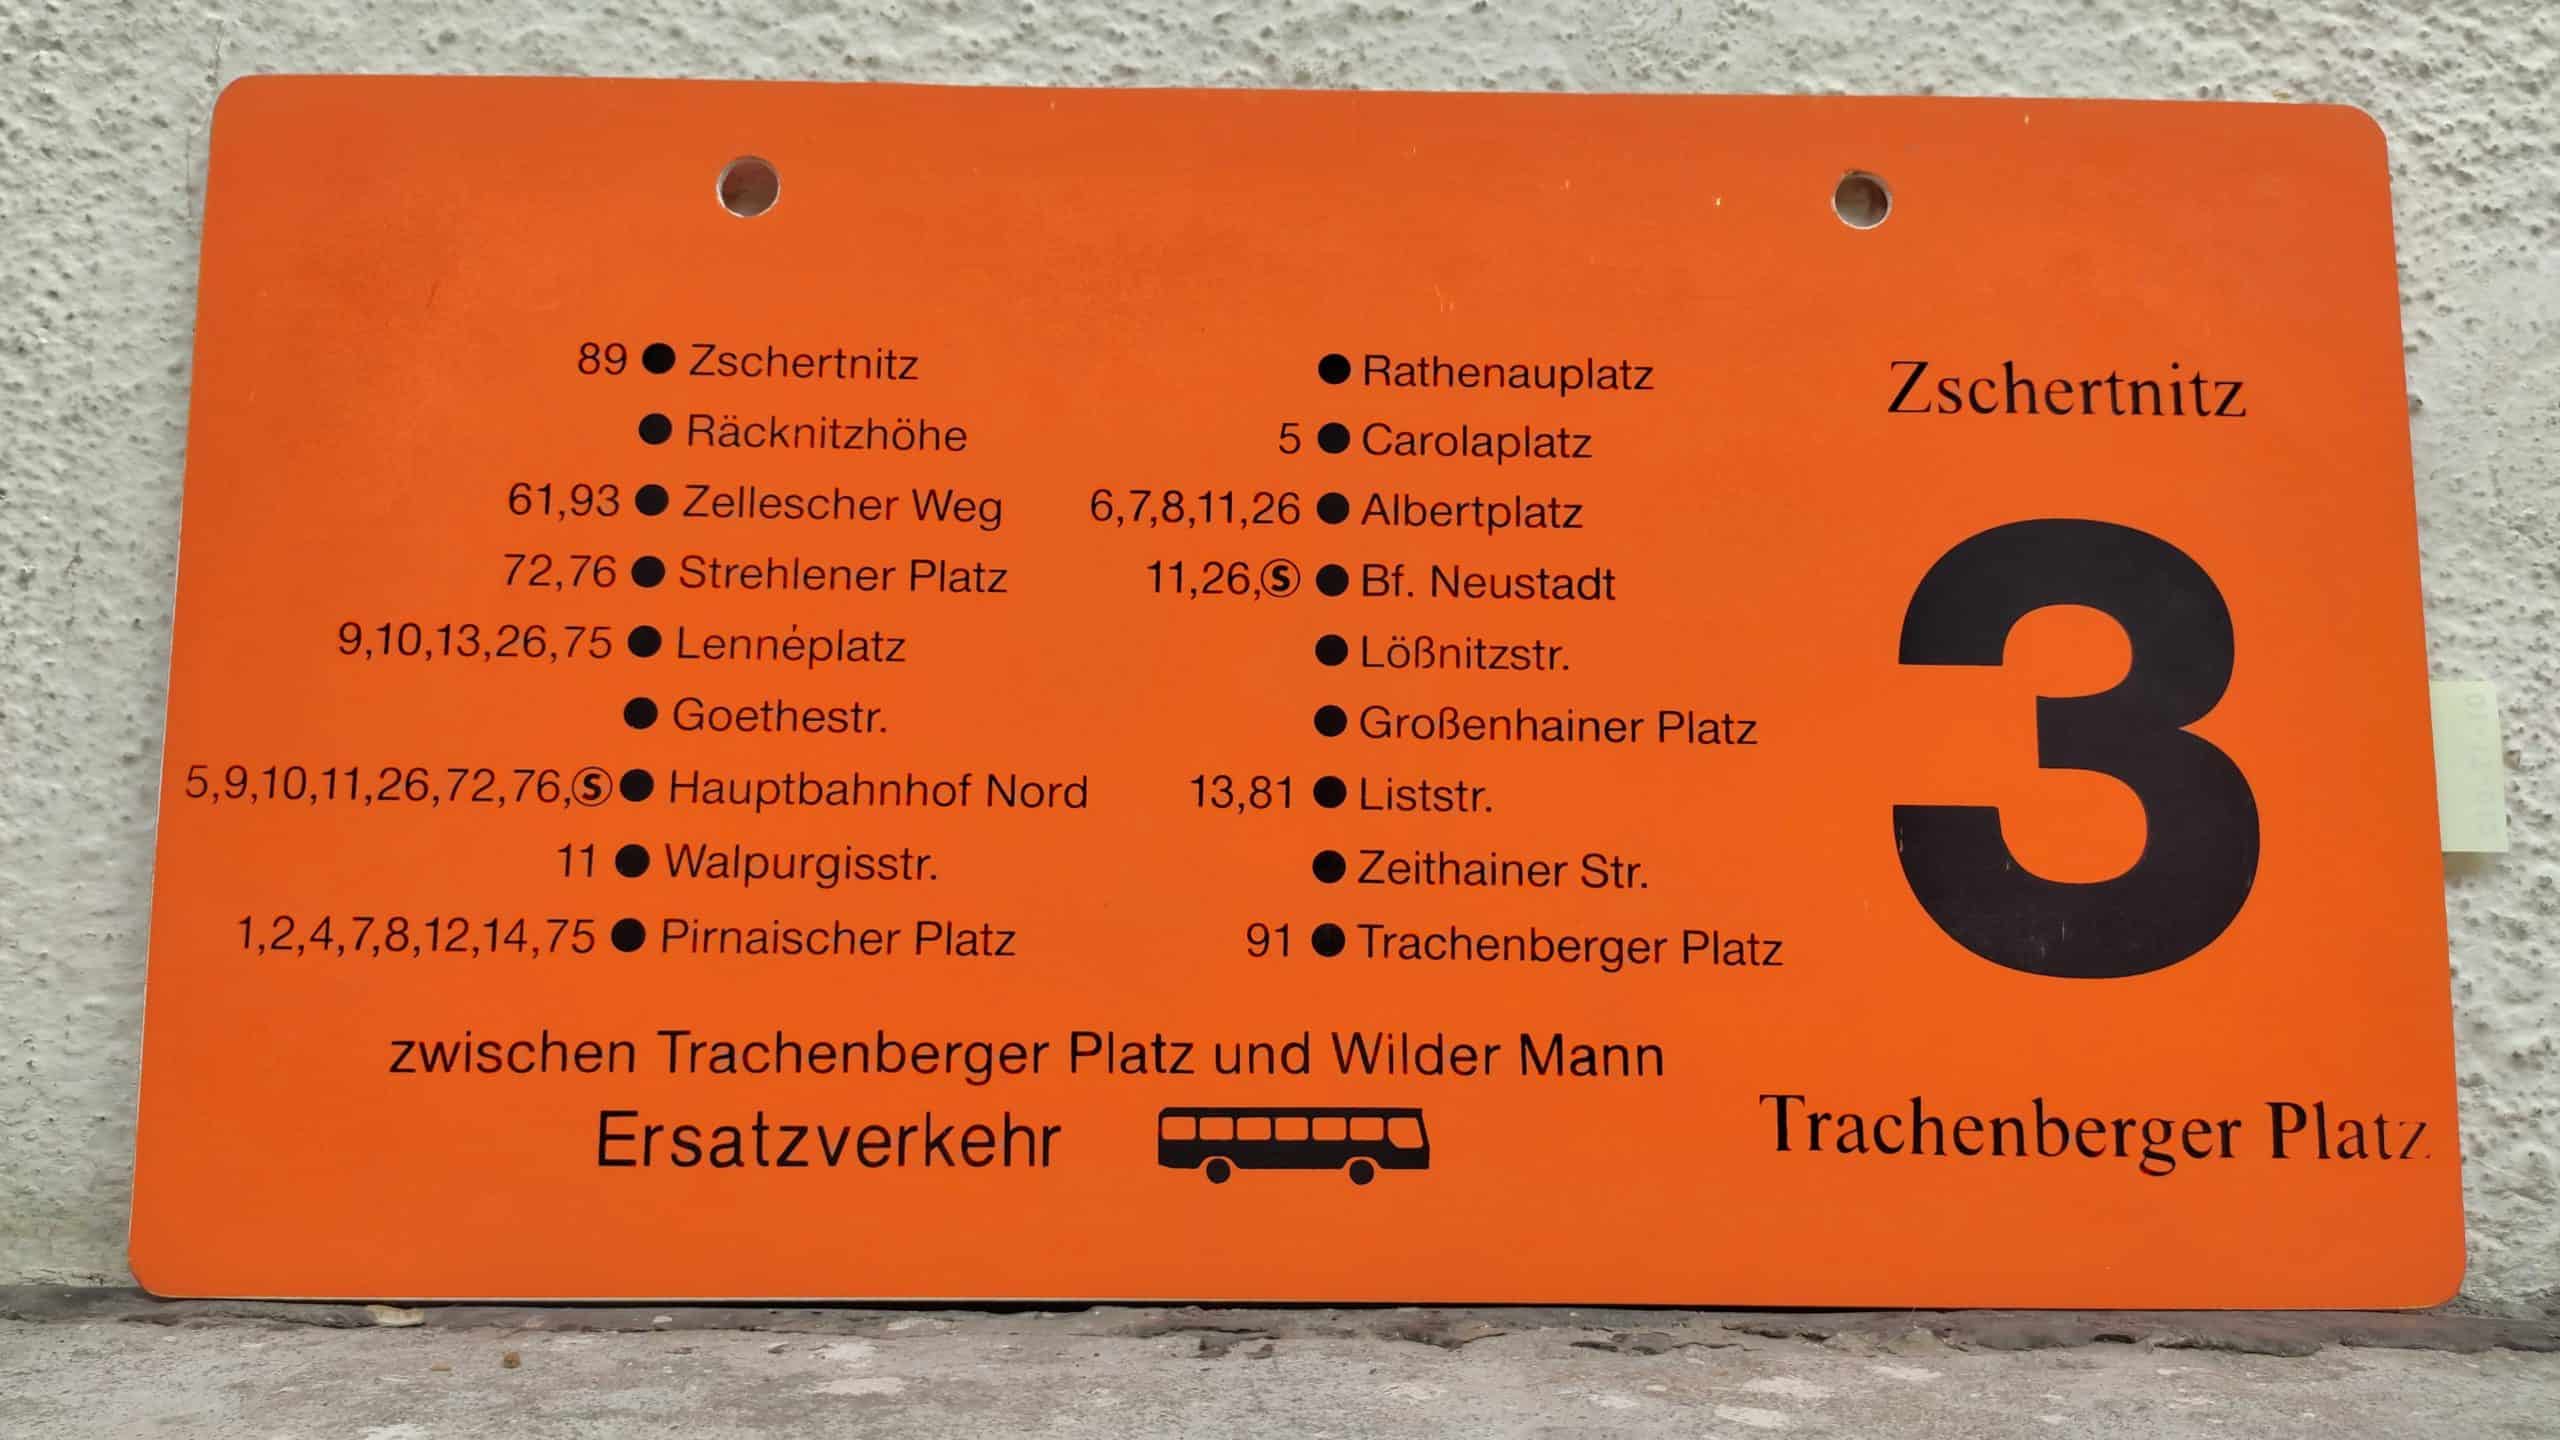 3 Zschertnitz – Trachenberger Platz #2